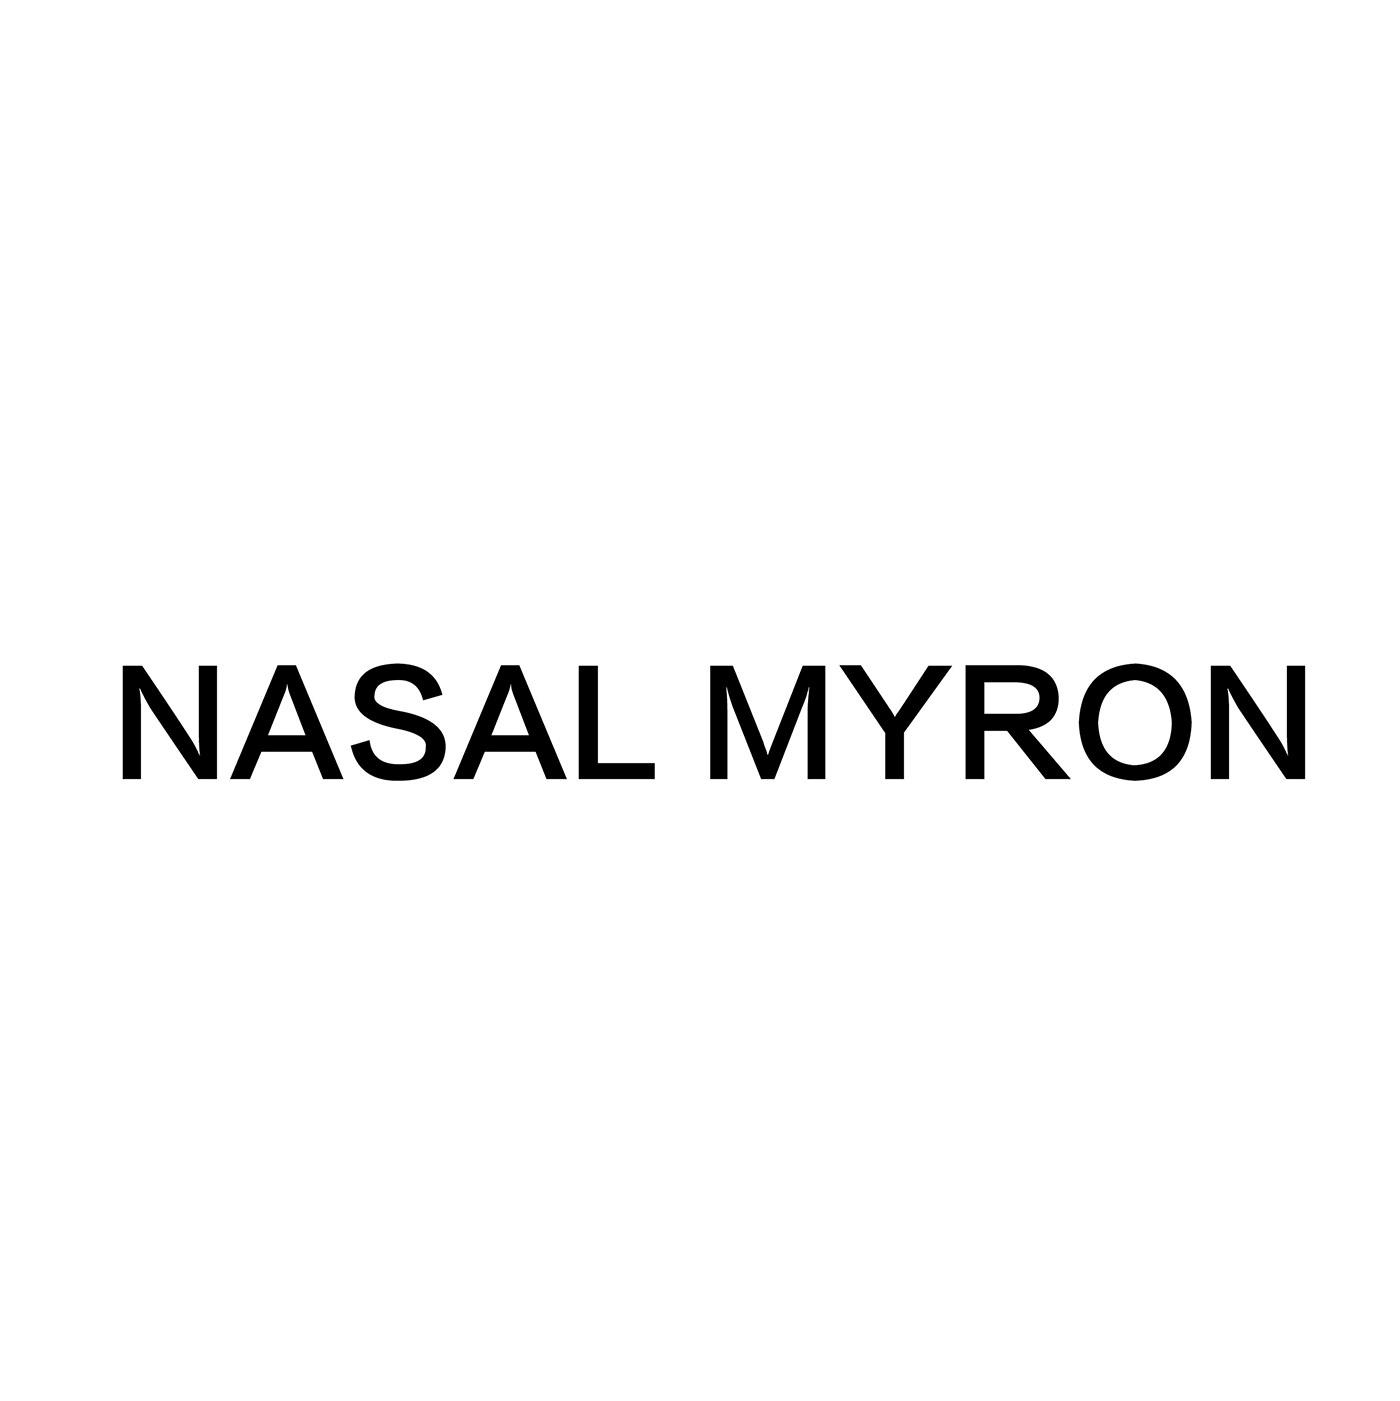 NASAL MYRON